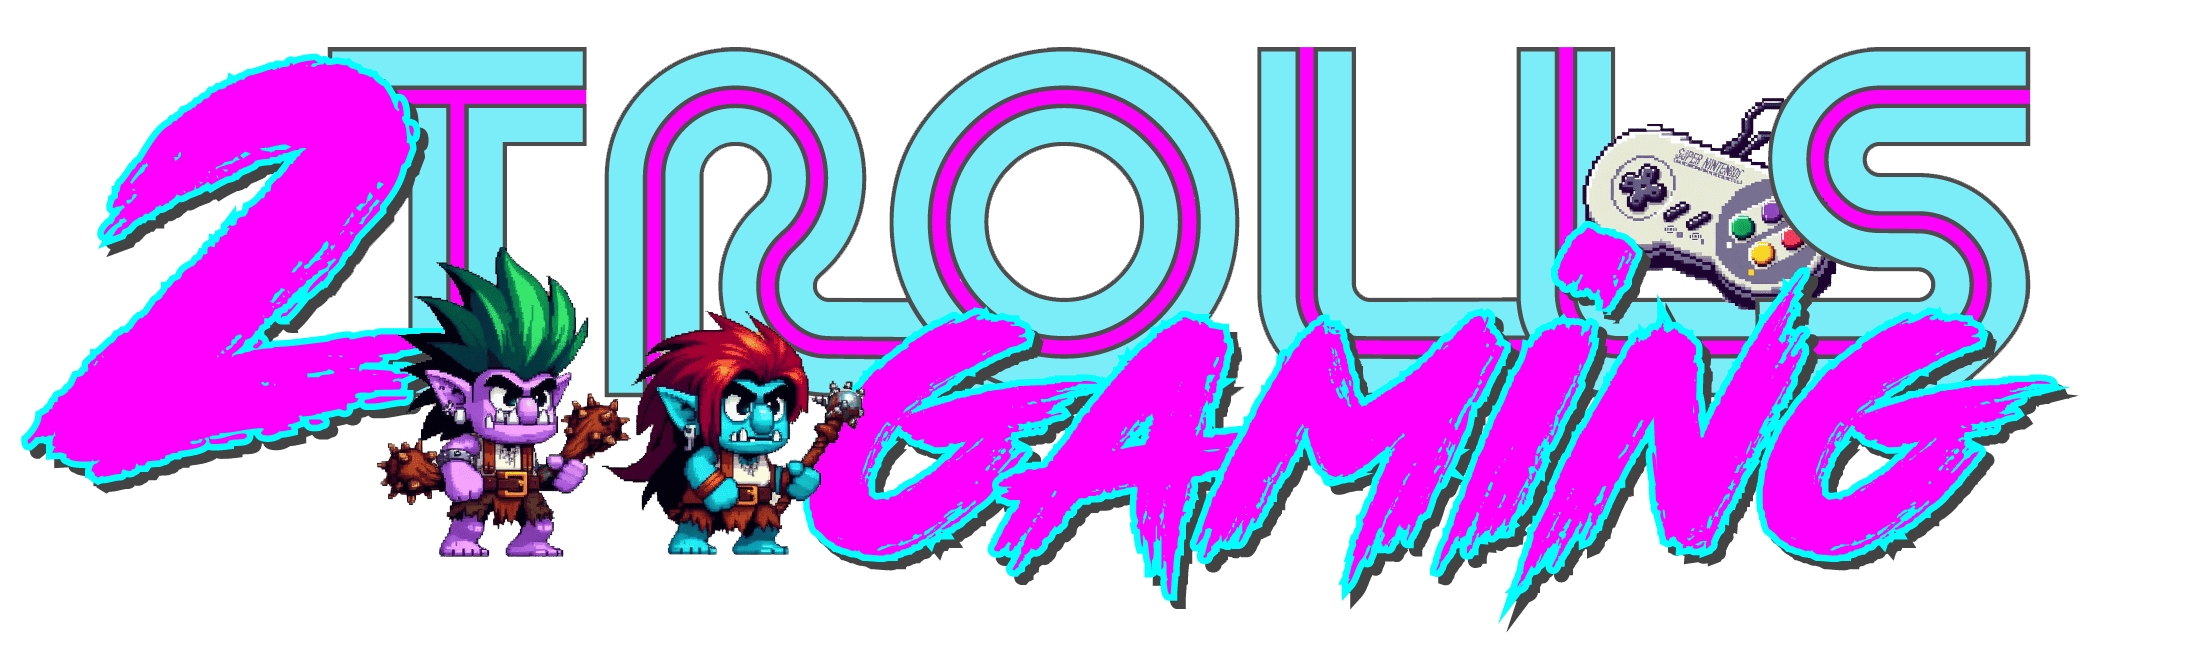 2 trolls Gaming logo